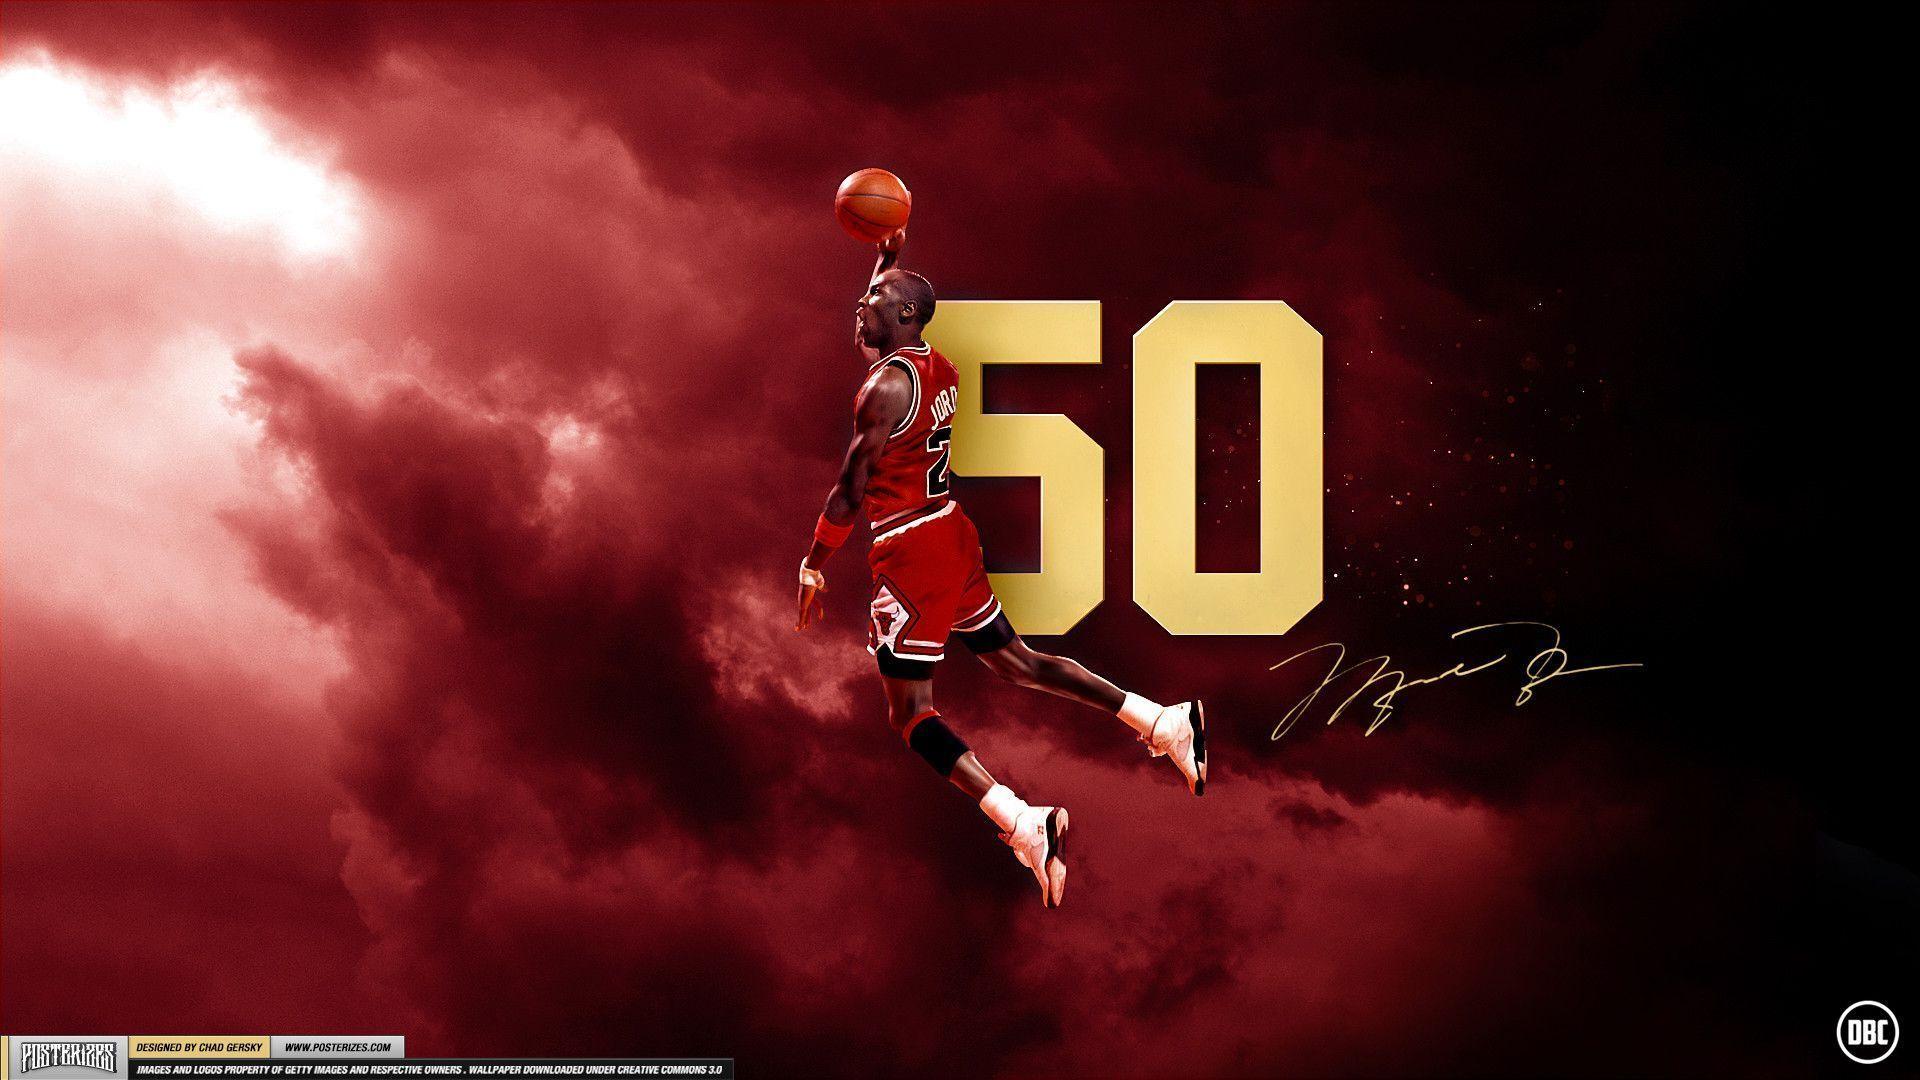 Michael Jordan HD Wallpaper